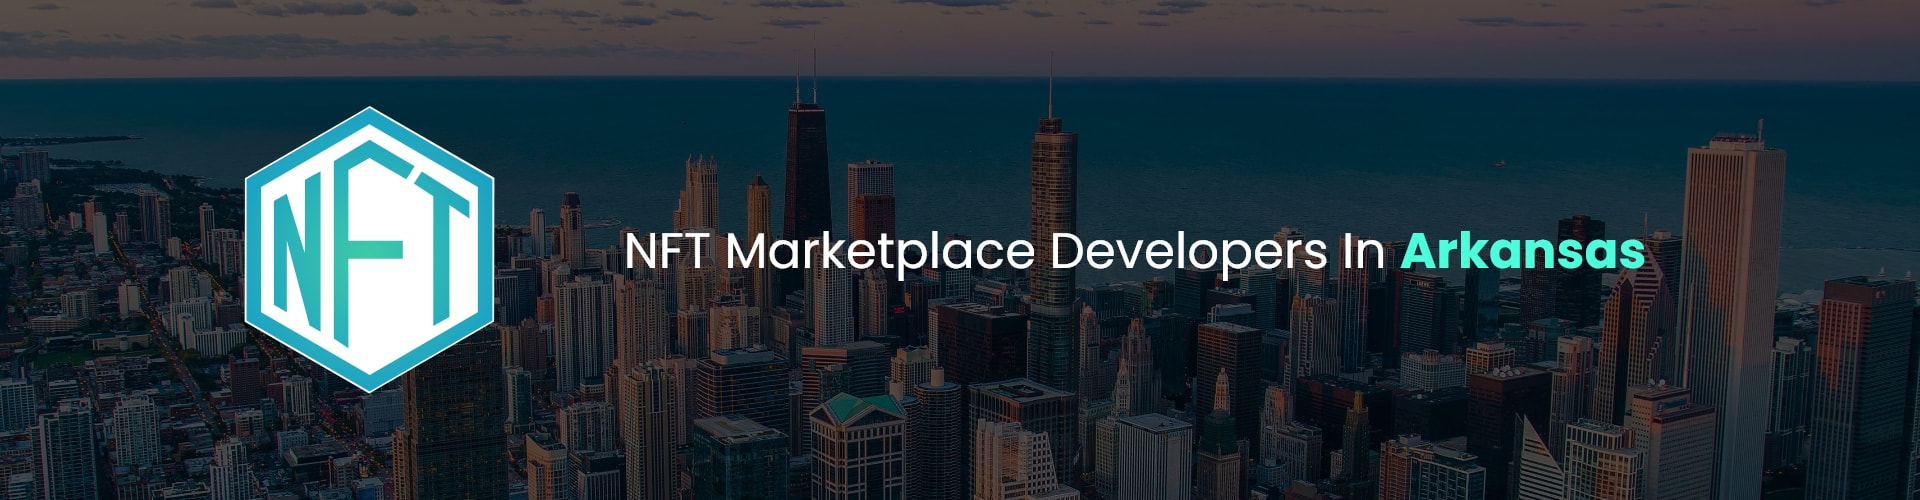 hire nft marketplace developers in arkansas